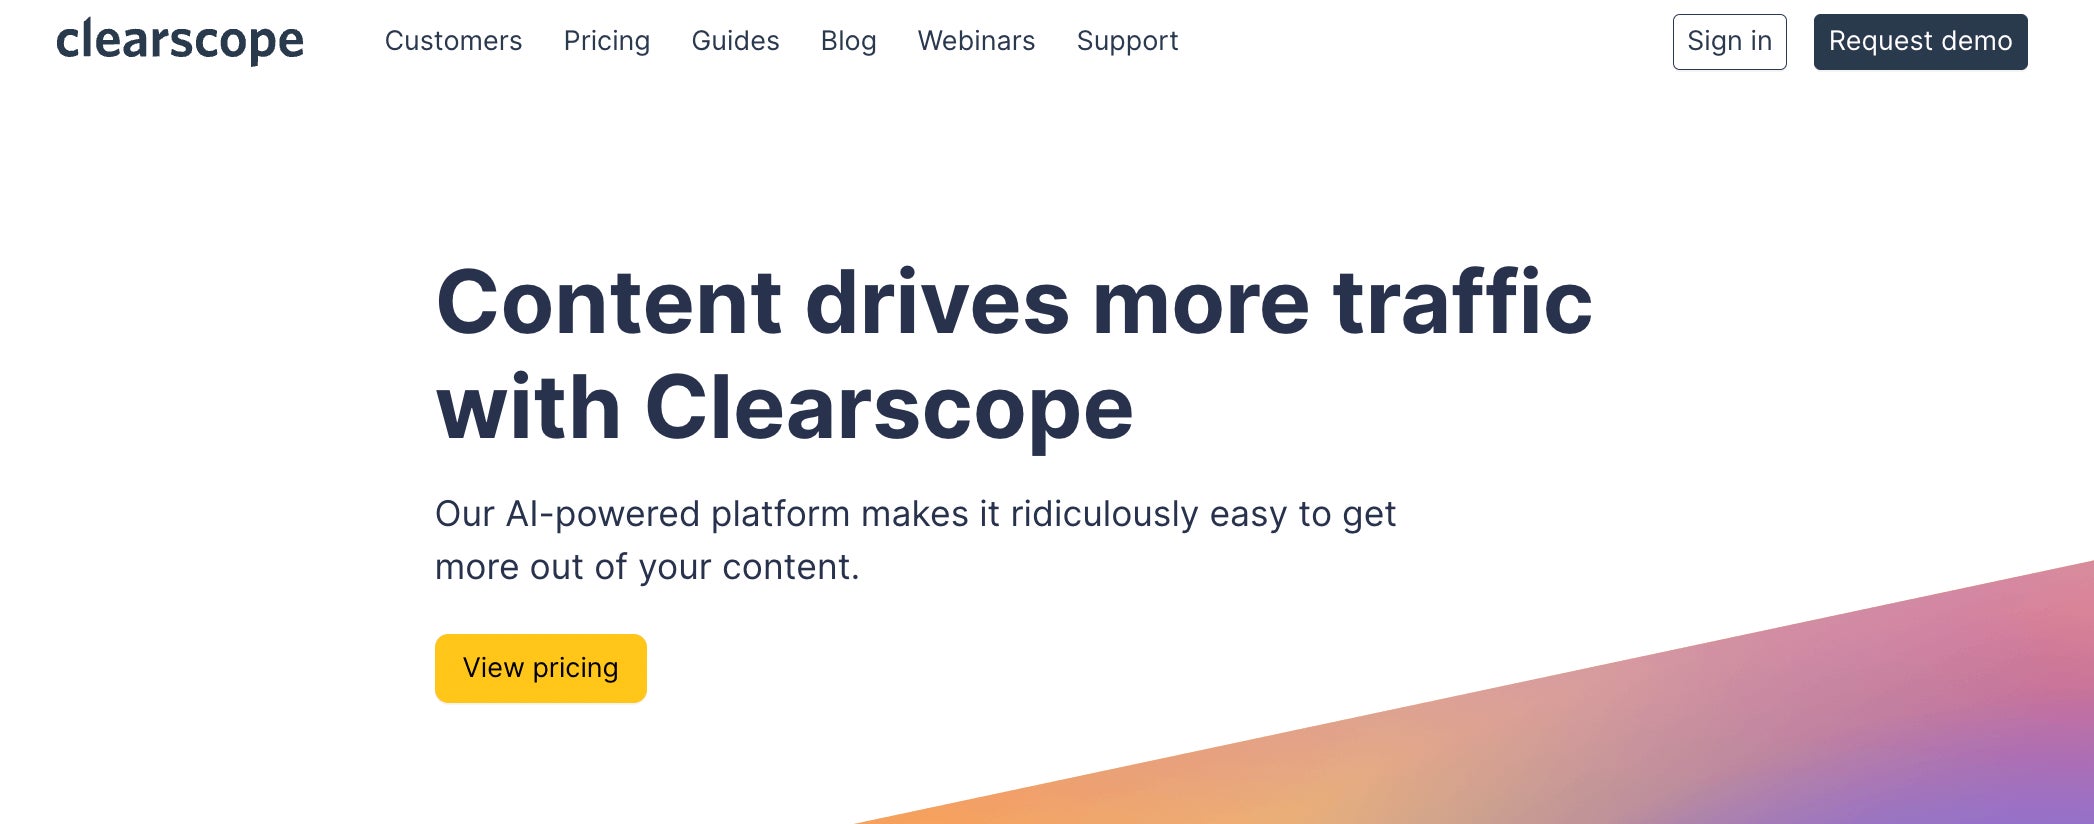 Clearscope homepage